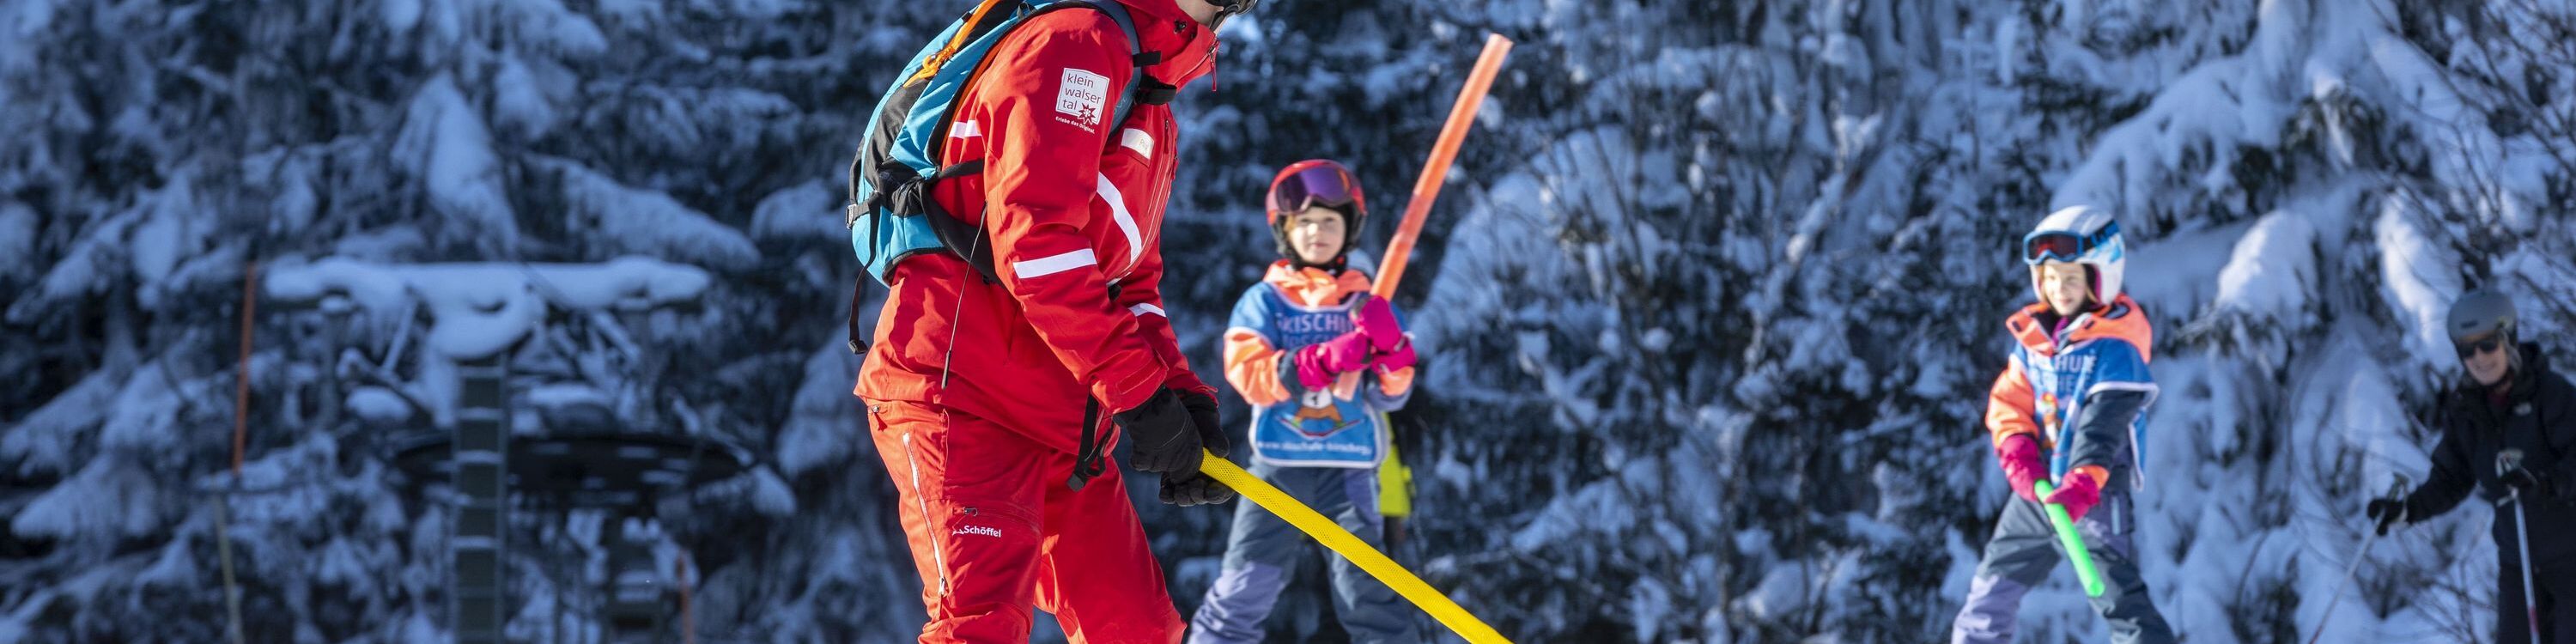 Ski course for children with ski instructor from the Hirschegg Ski School